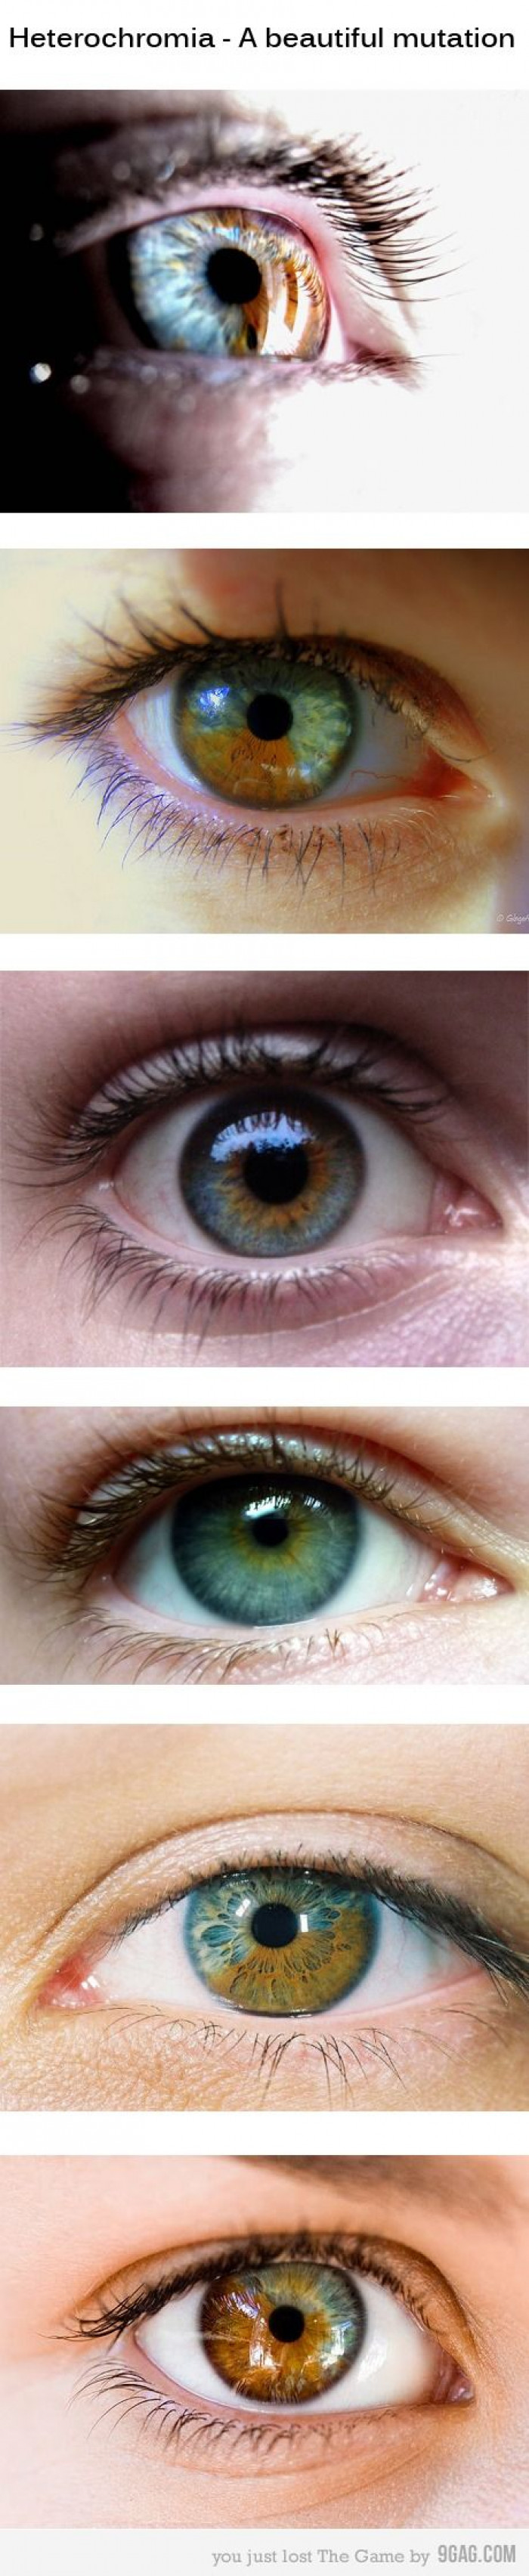 Heterochromia A Beautiful Mutation Ladblab 